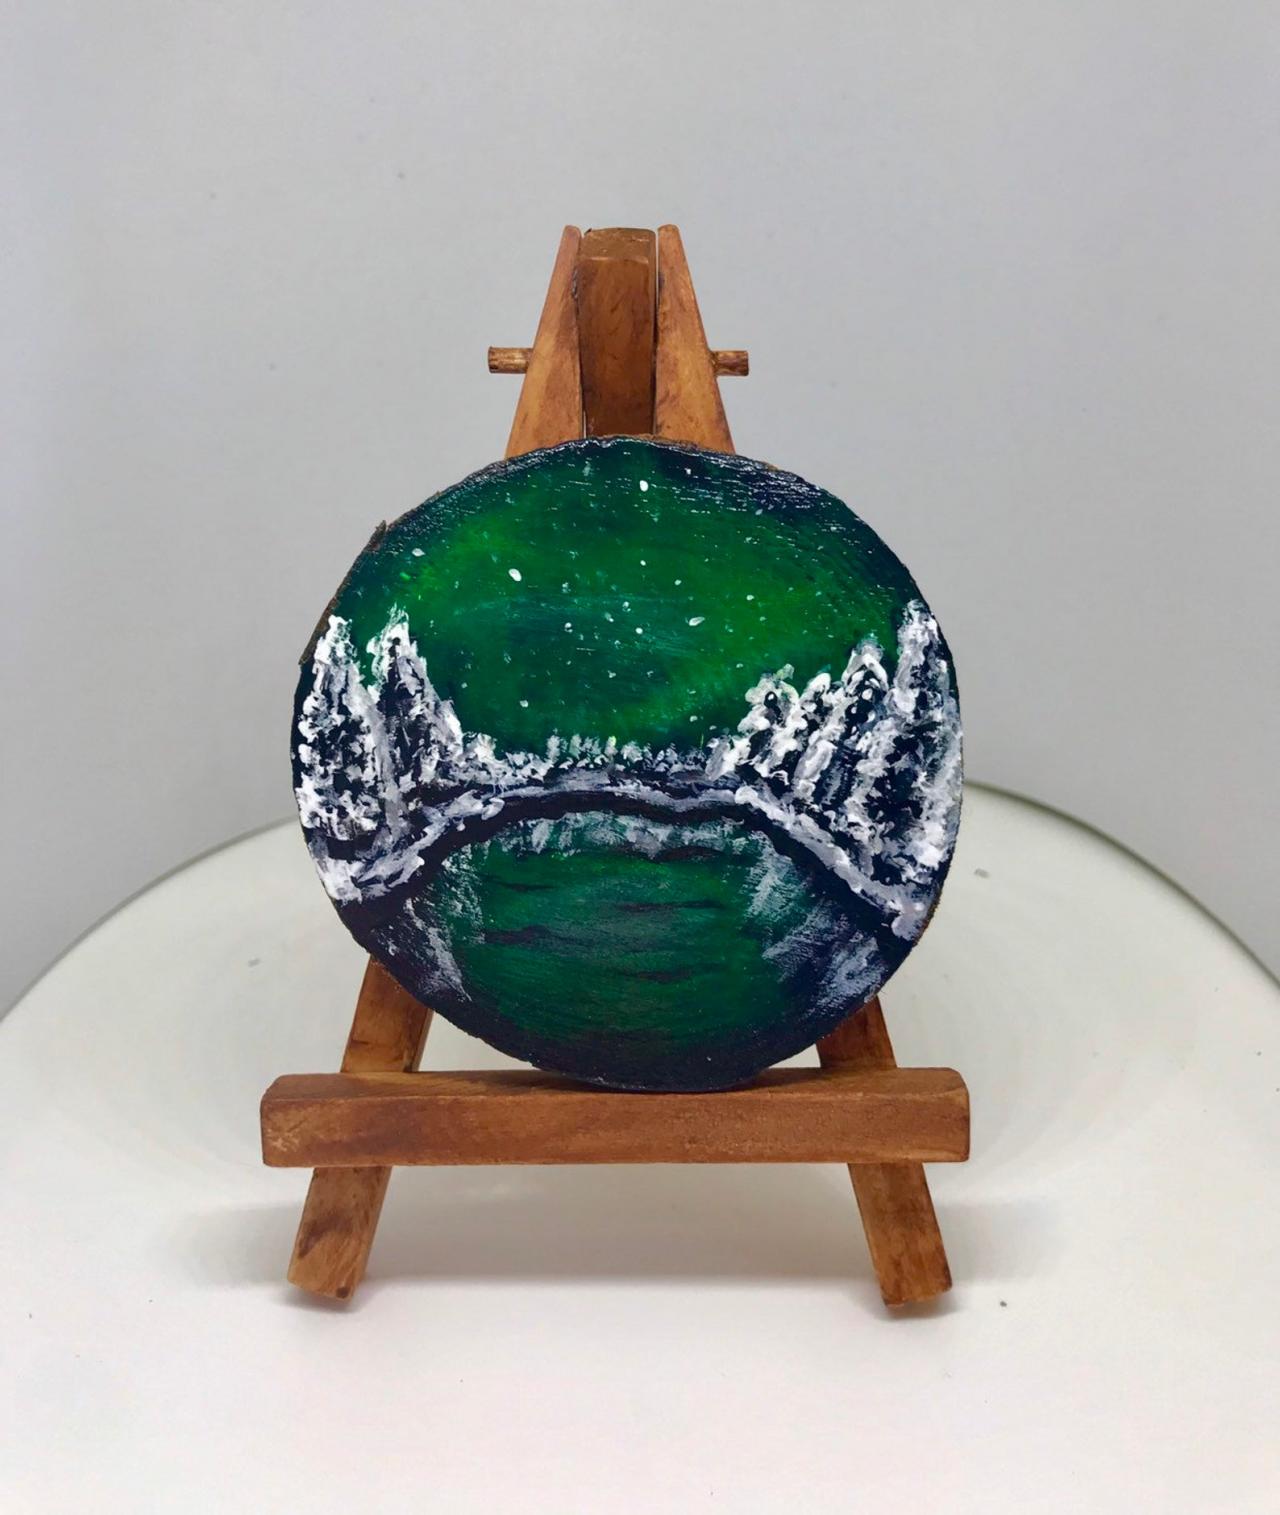 Aurora Borealis Mini Painting On Wood With Easel